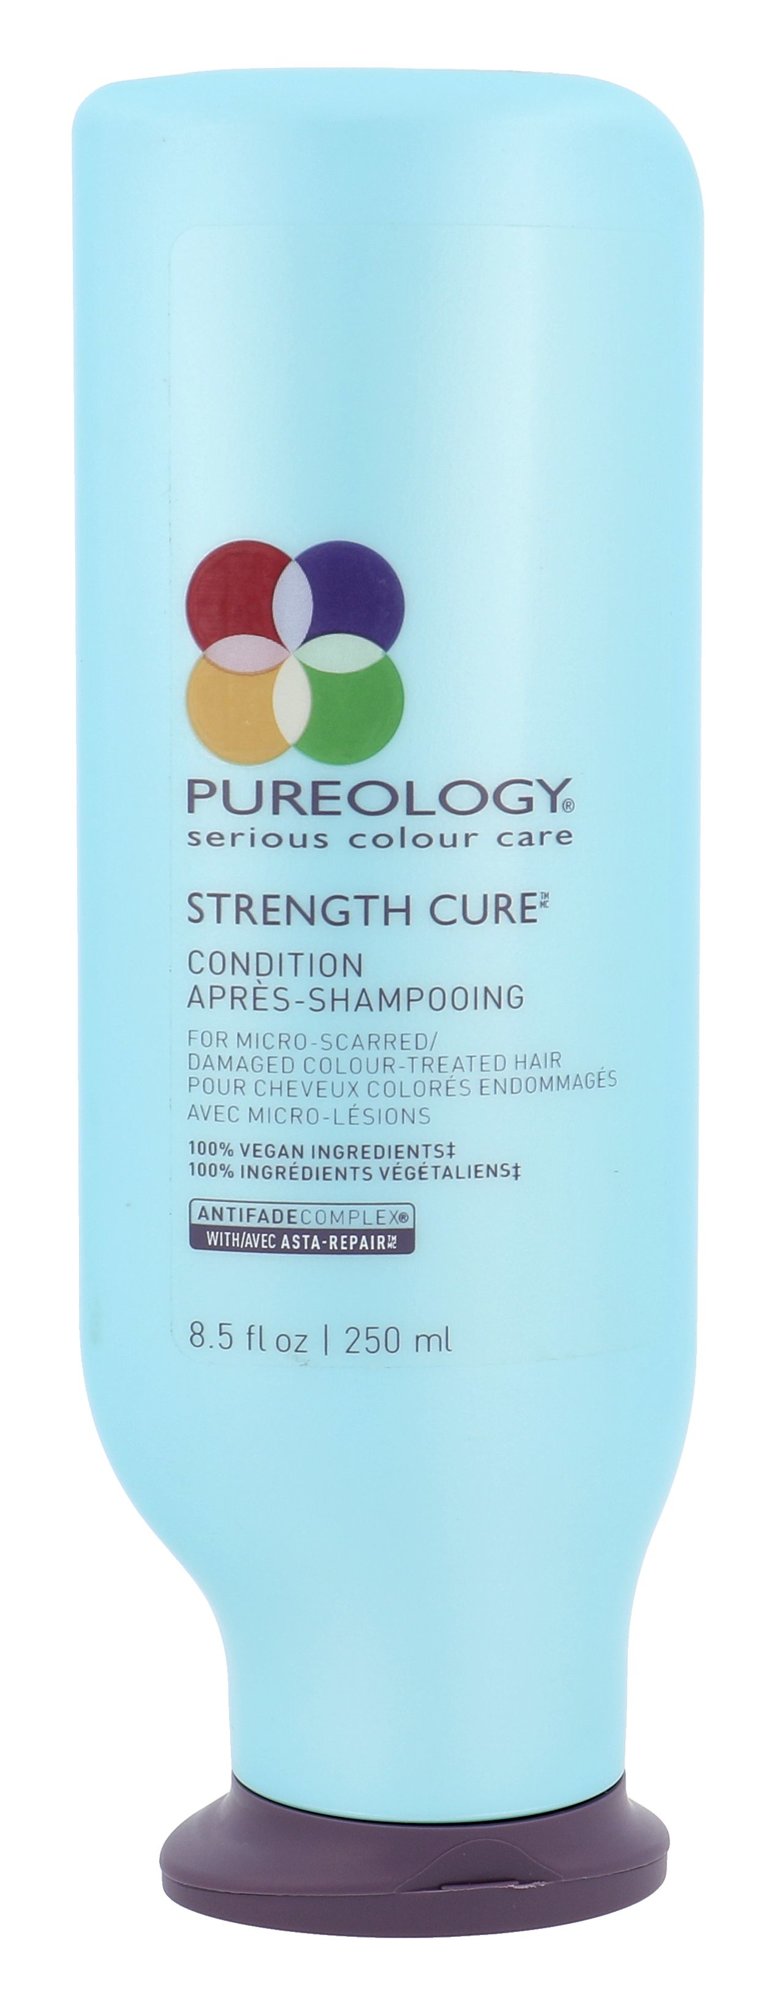 Redken Pureology Strength Cure 250ml kondicionierius